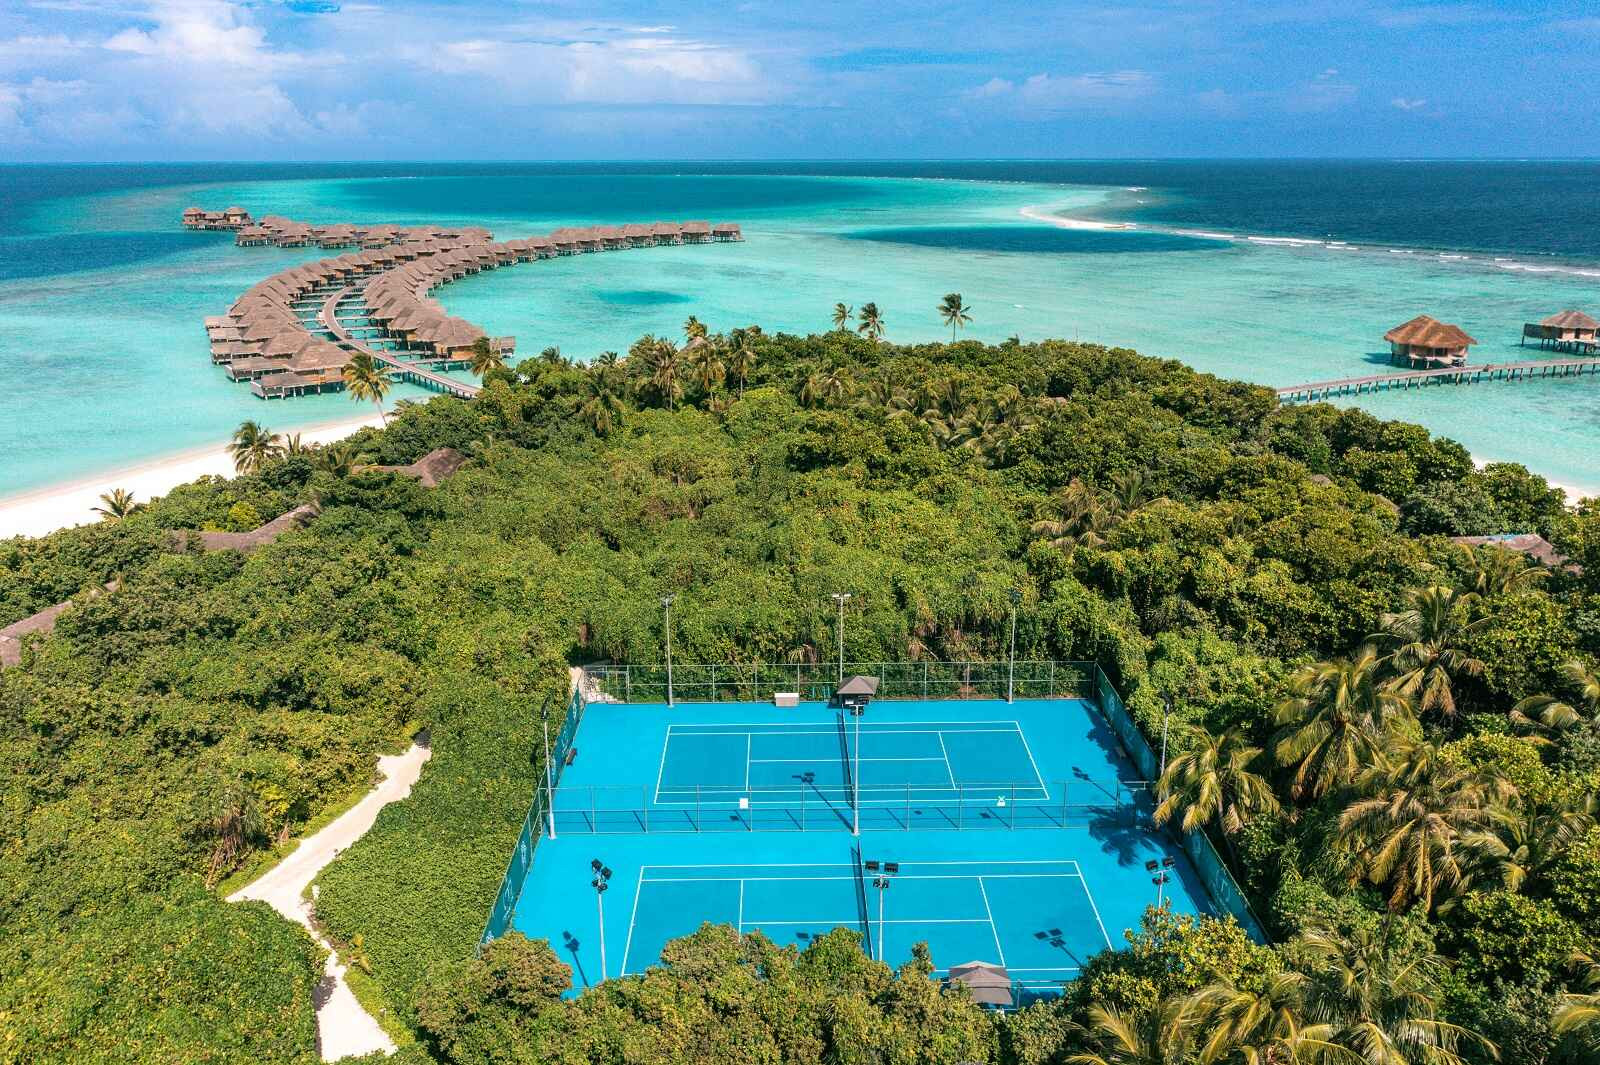 Tennis Ace Mate Pavic Serves Up Exclusive Experience at Vakkaru Maldives